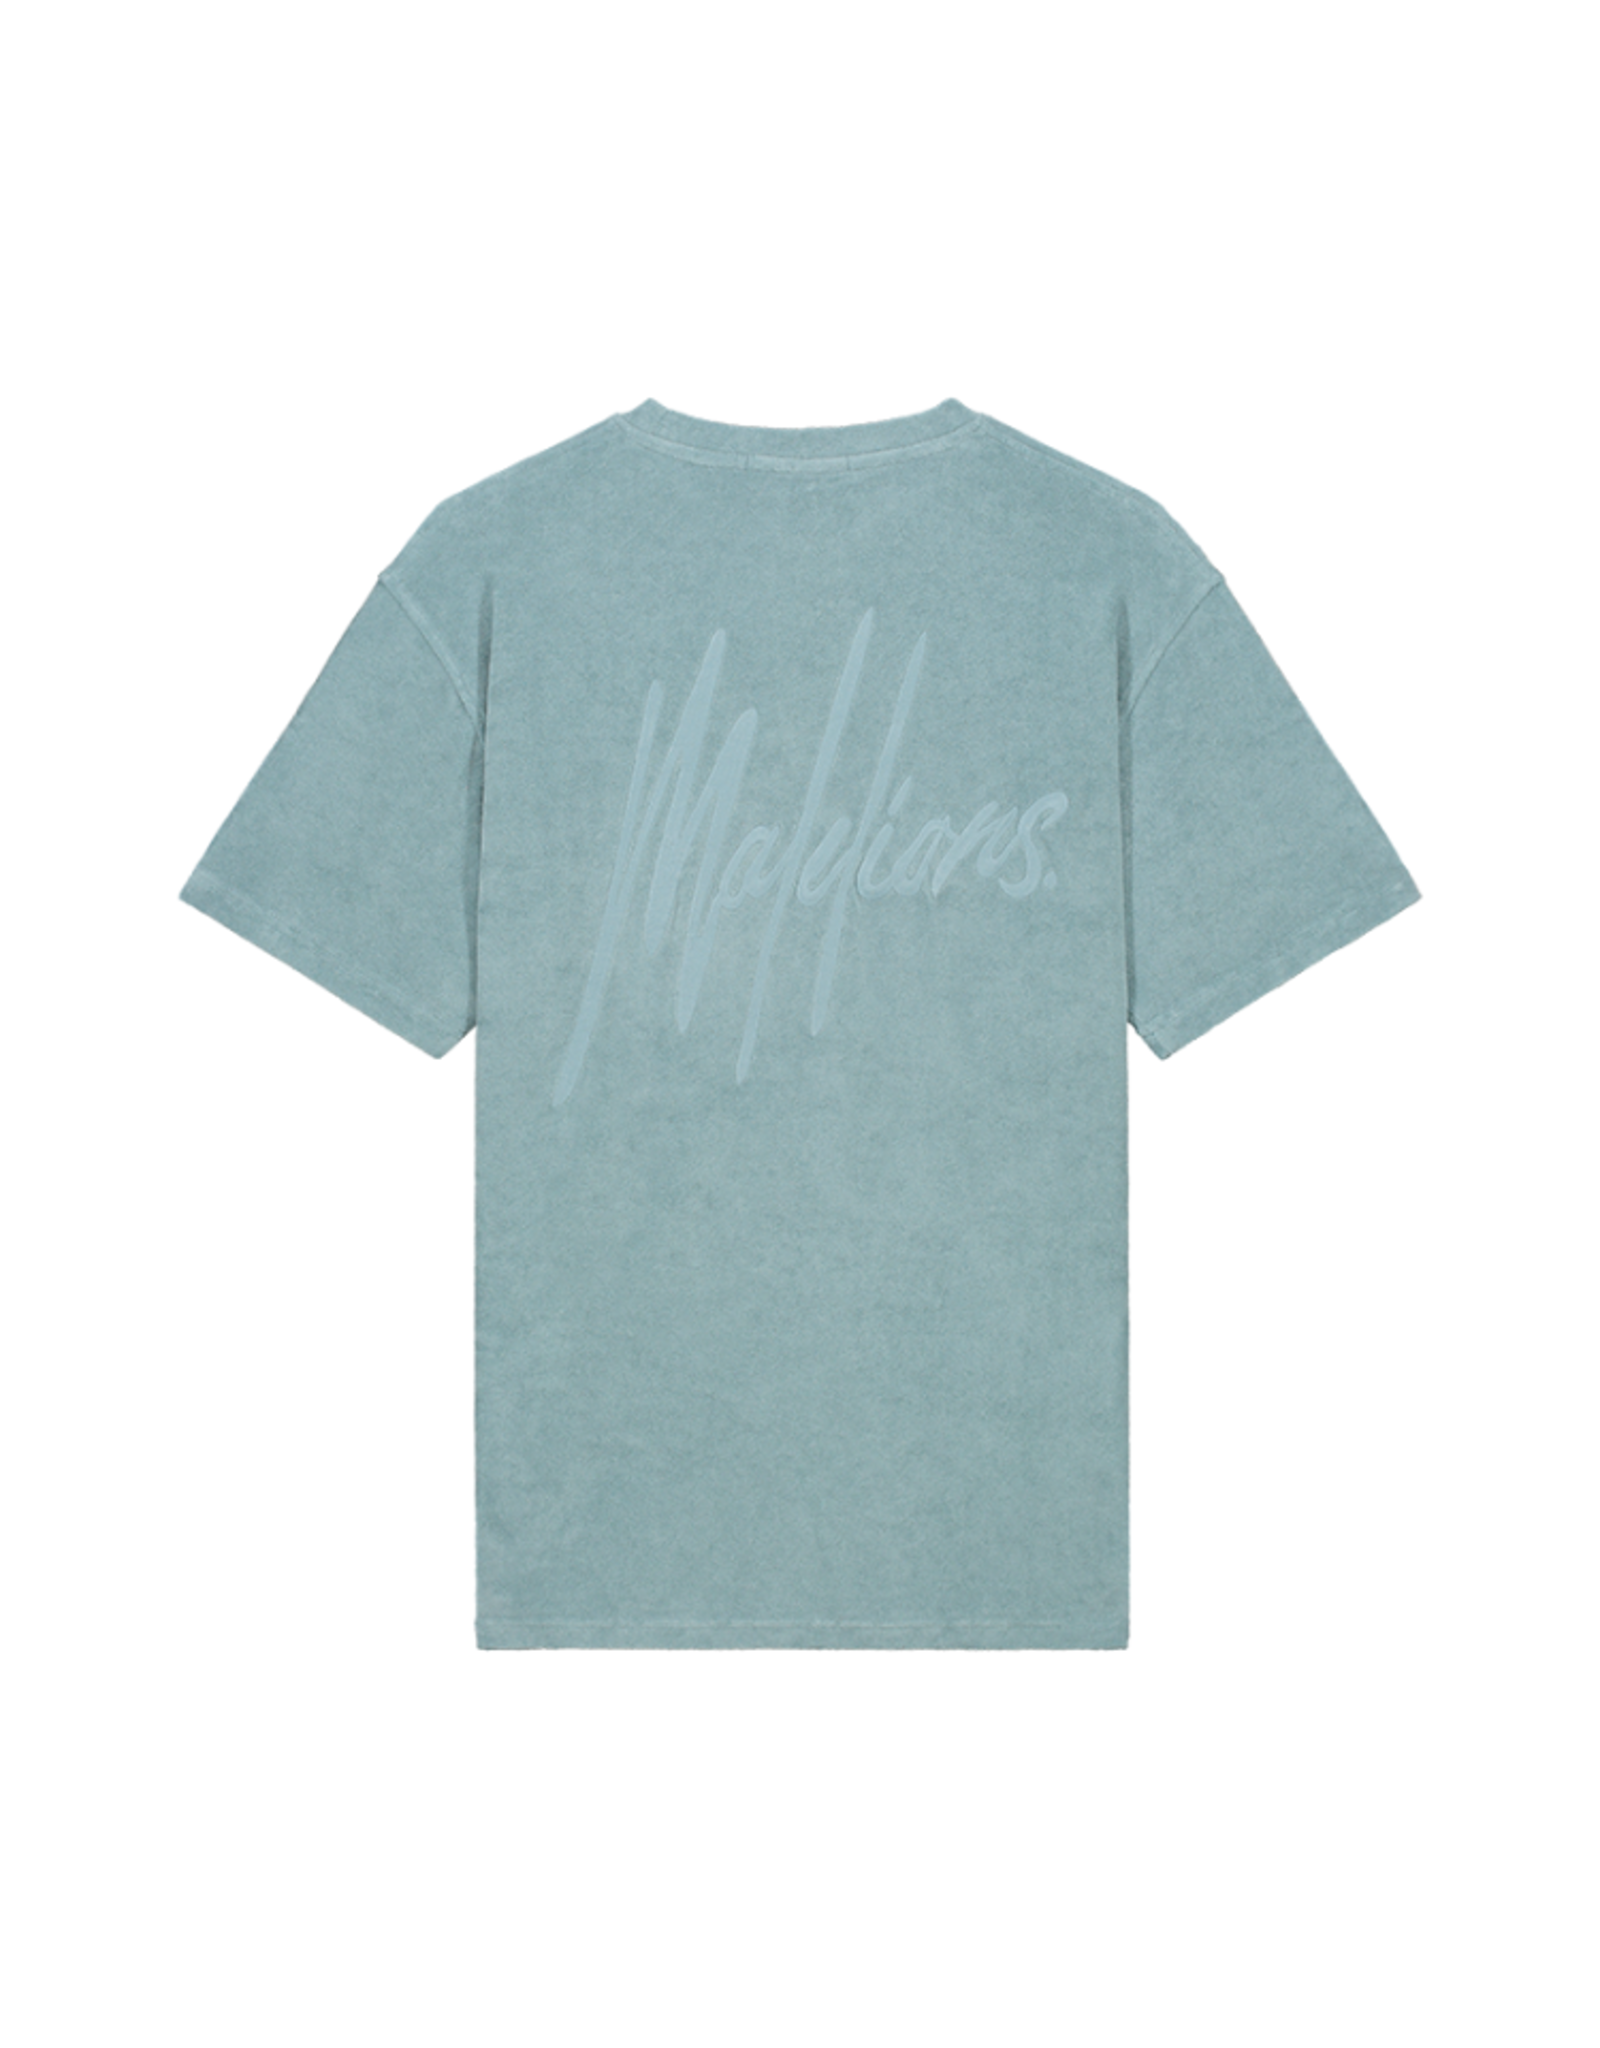 Malelions Signature Toweling T-Shirt